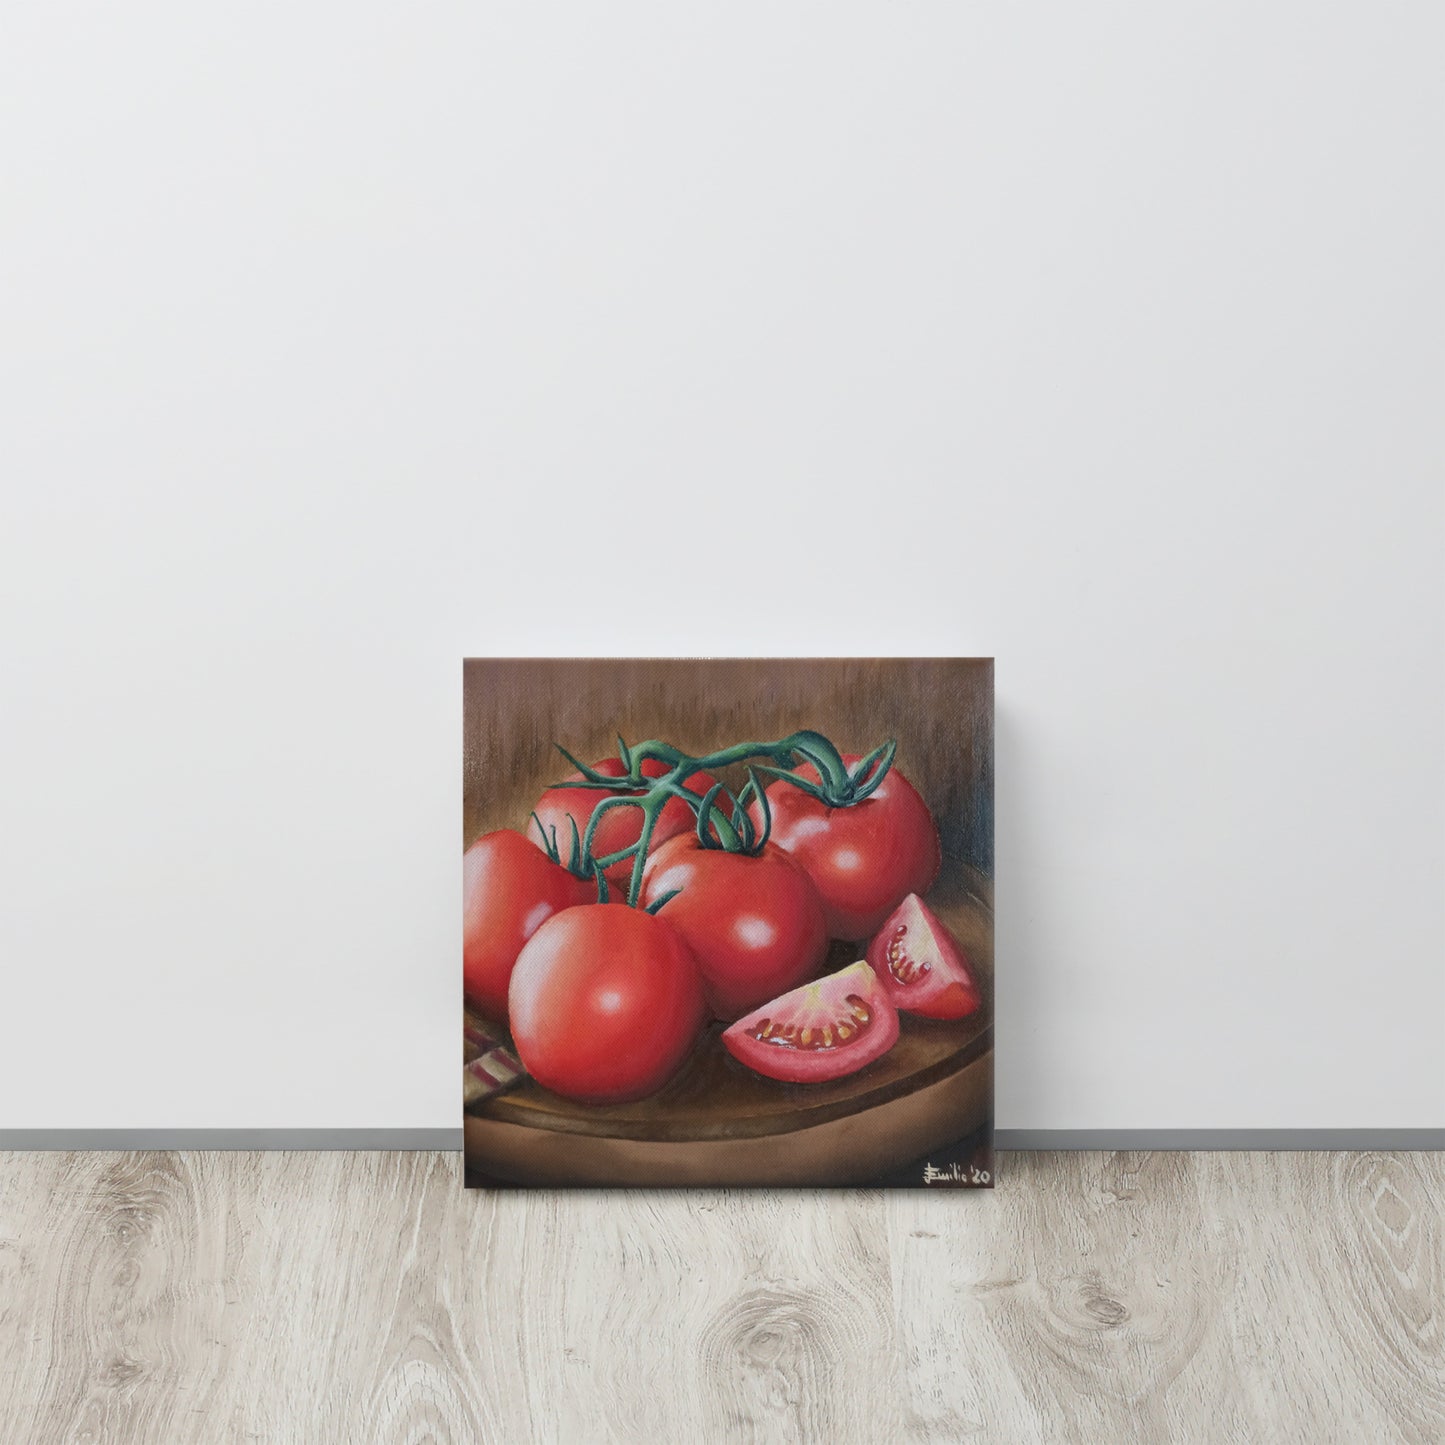 Tomatoes - Oil on Canvas - Still life